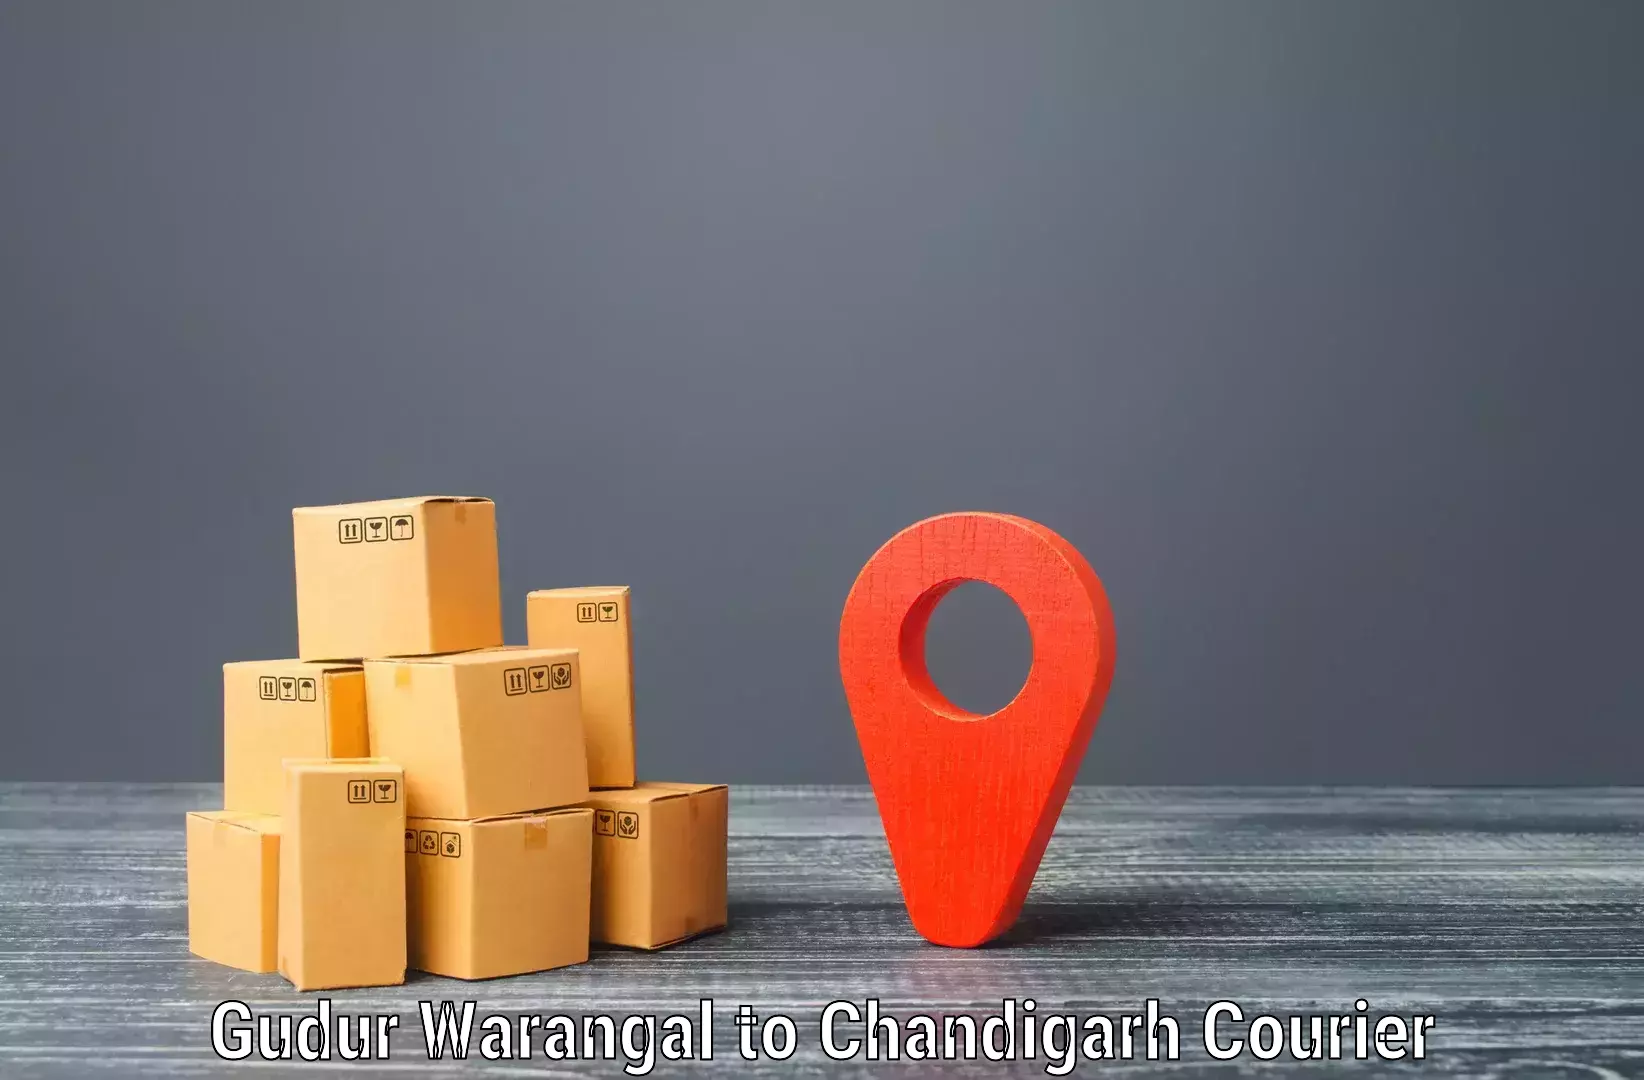 Express package transport Gudur Warangal to Chandigarh